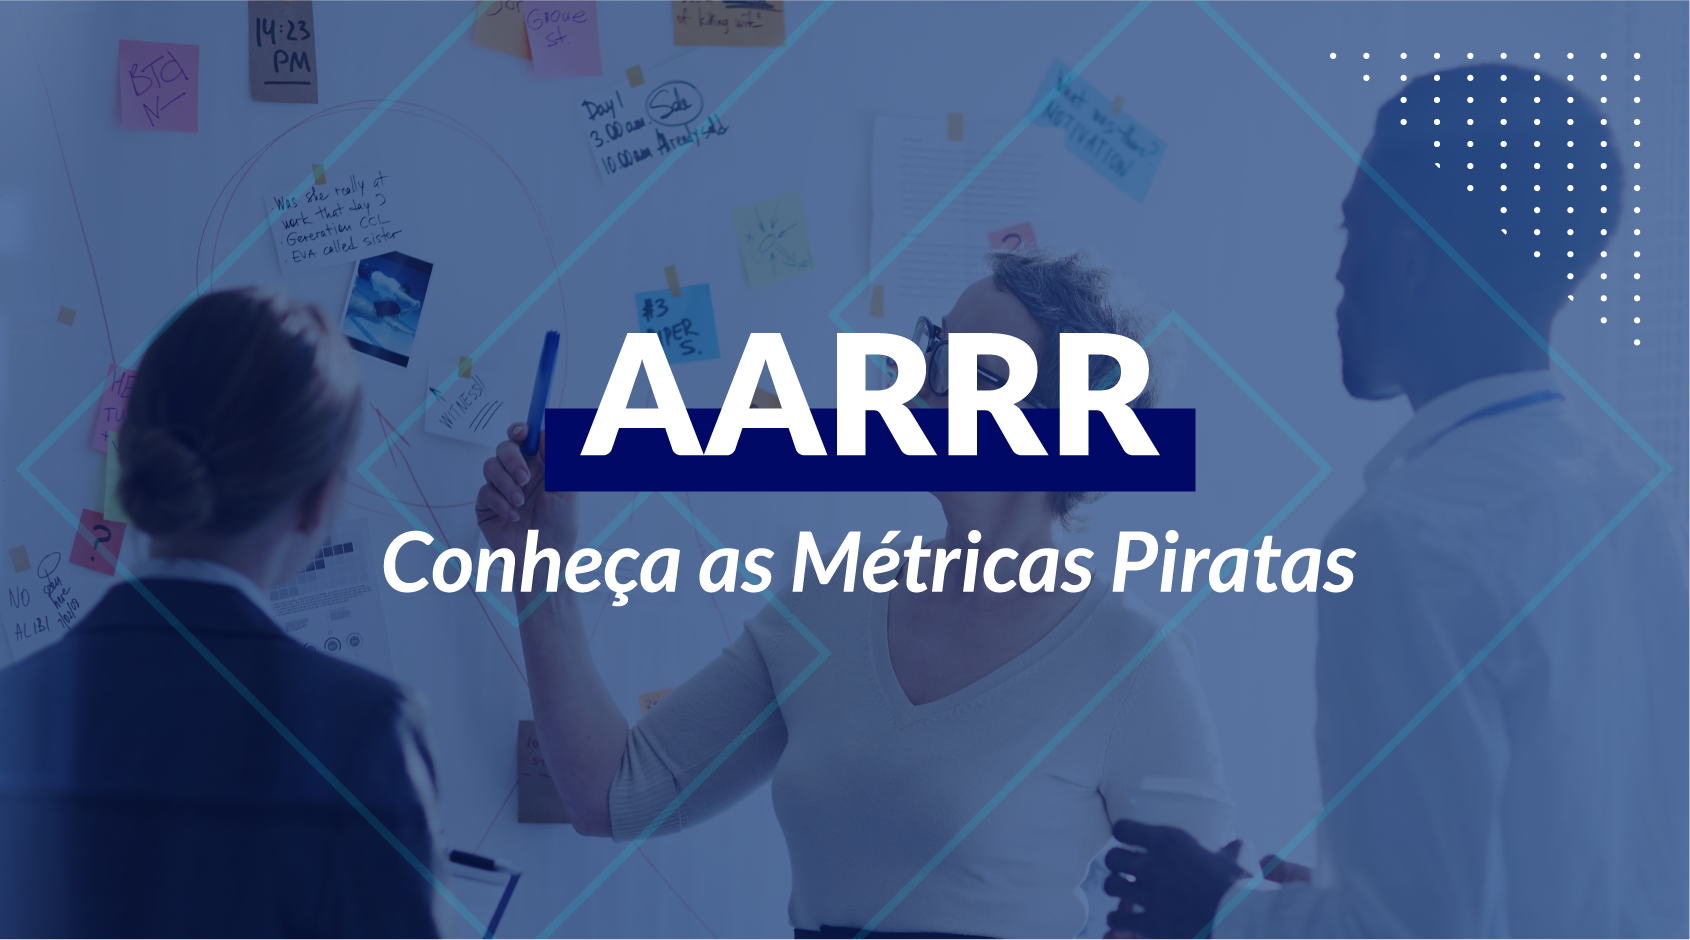  AARRR: Conheça as Métricas Piratas